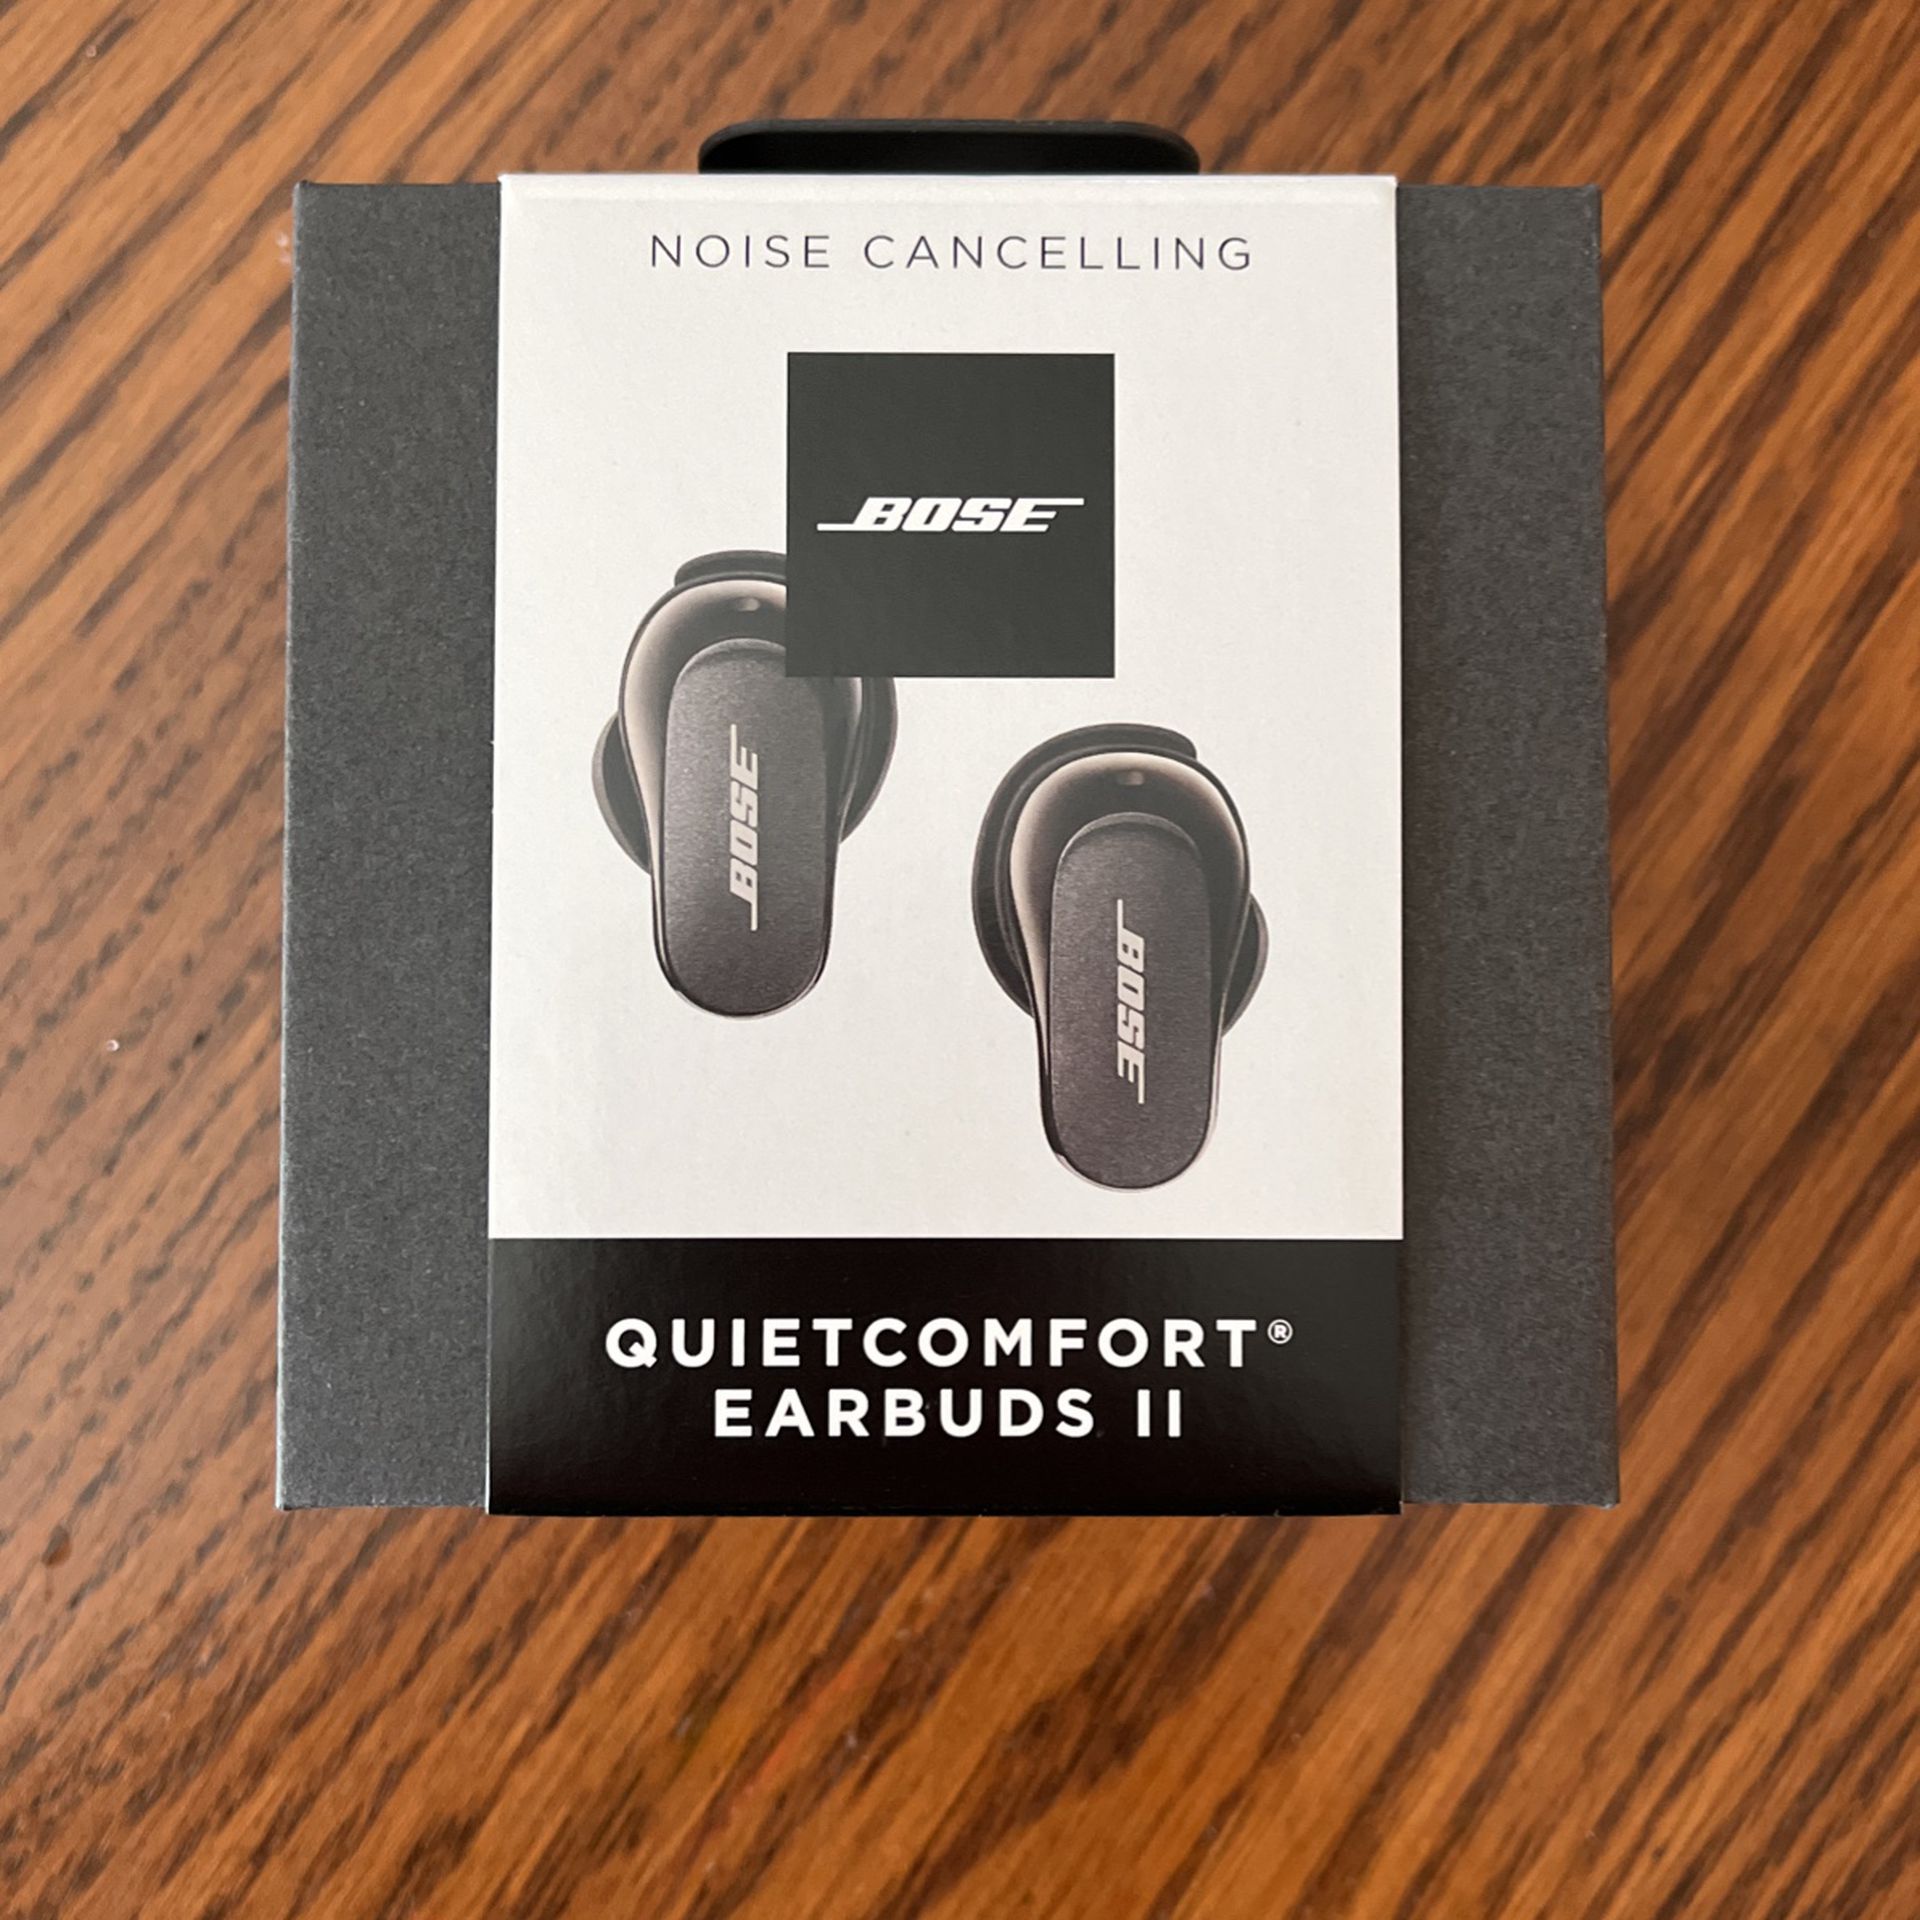 Bose Noise Canceling Headphones (New)